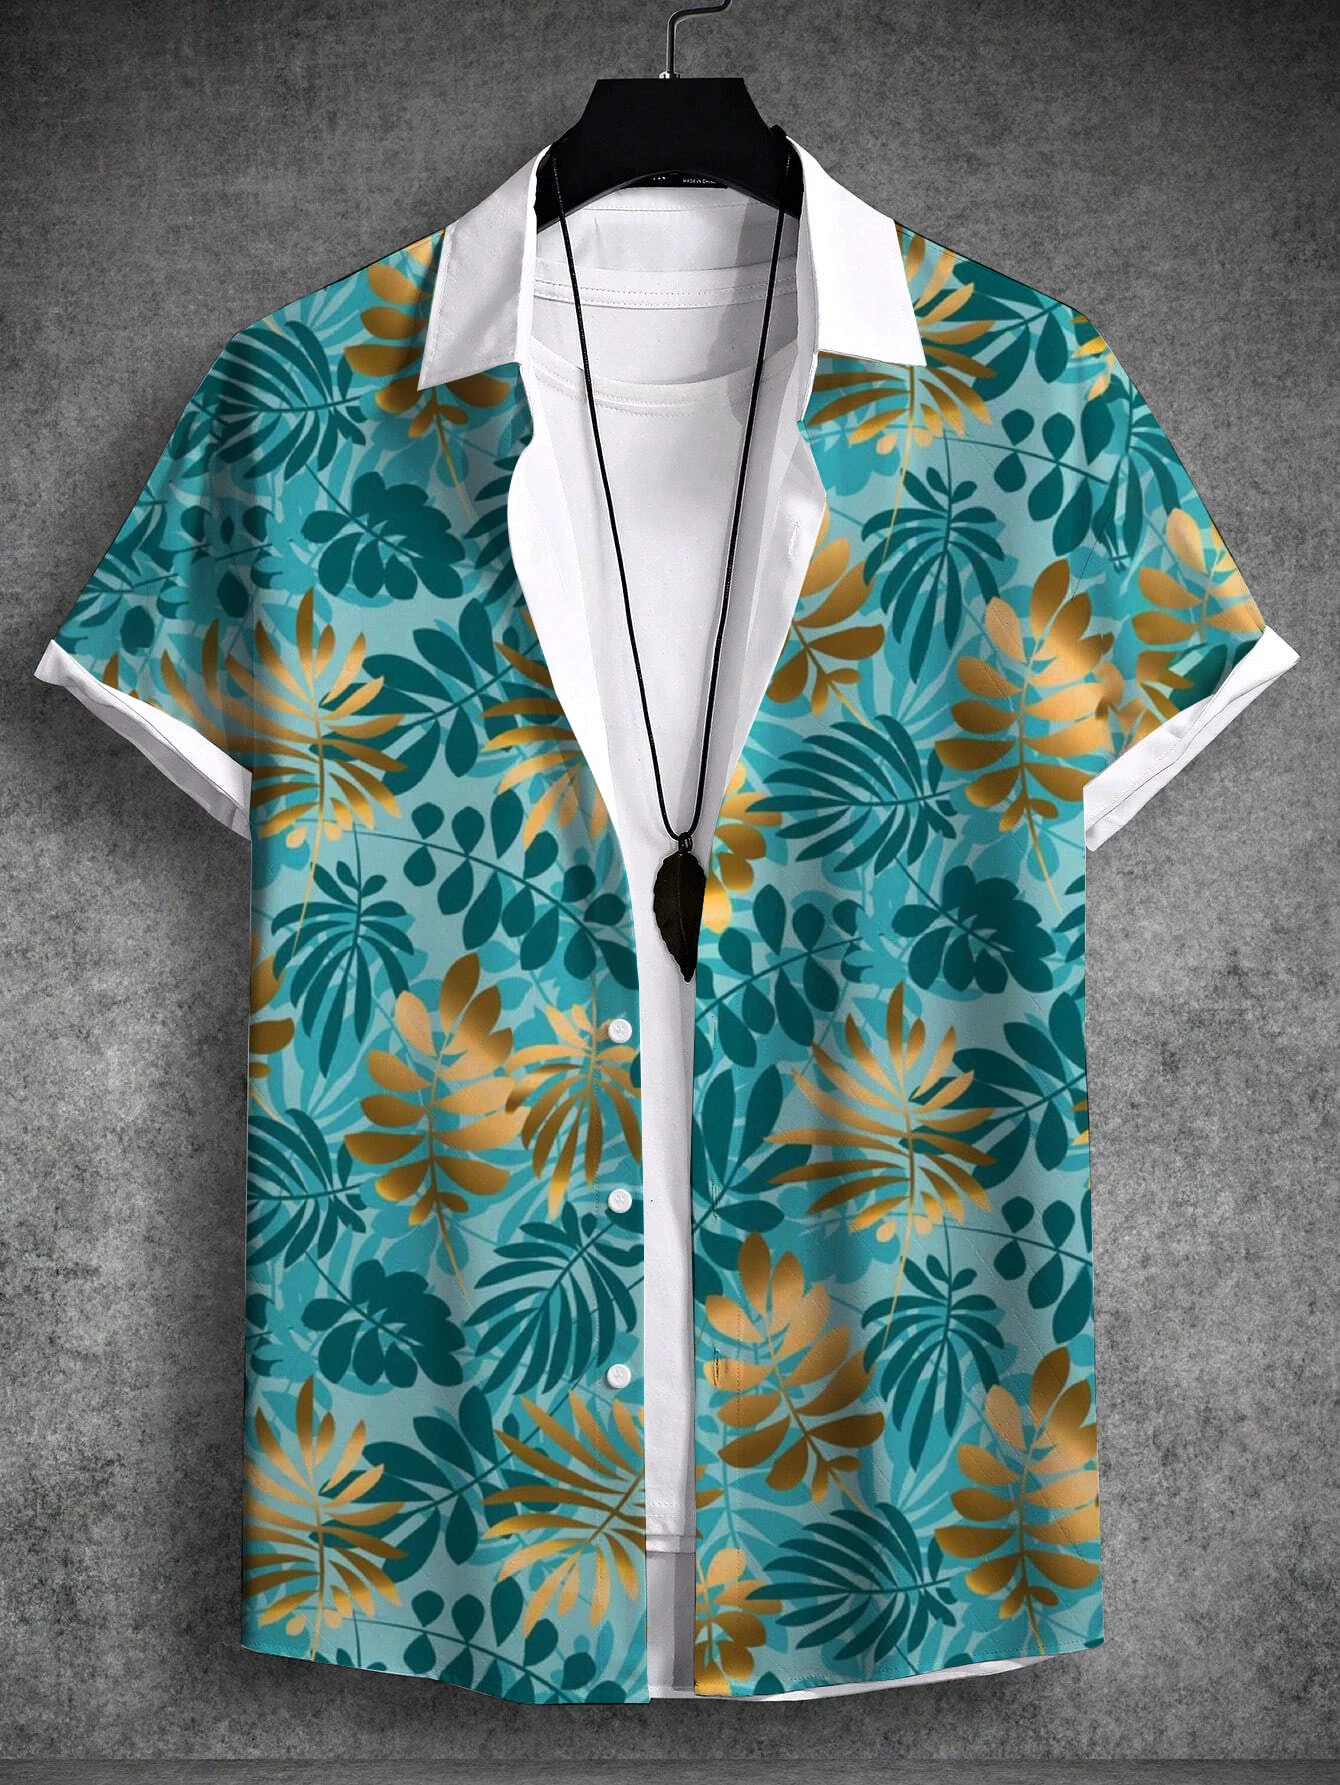 

New Men's Tropical Print Beach Vacation Set Plant Coconut Tree Short Sleeve Summer Hawaiian Shirt 4-Way Stretch Fabric Shirts